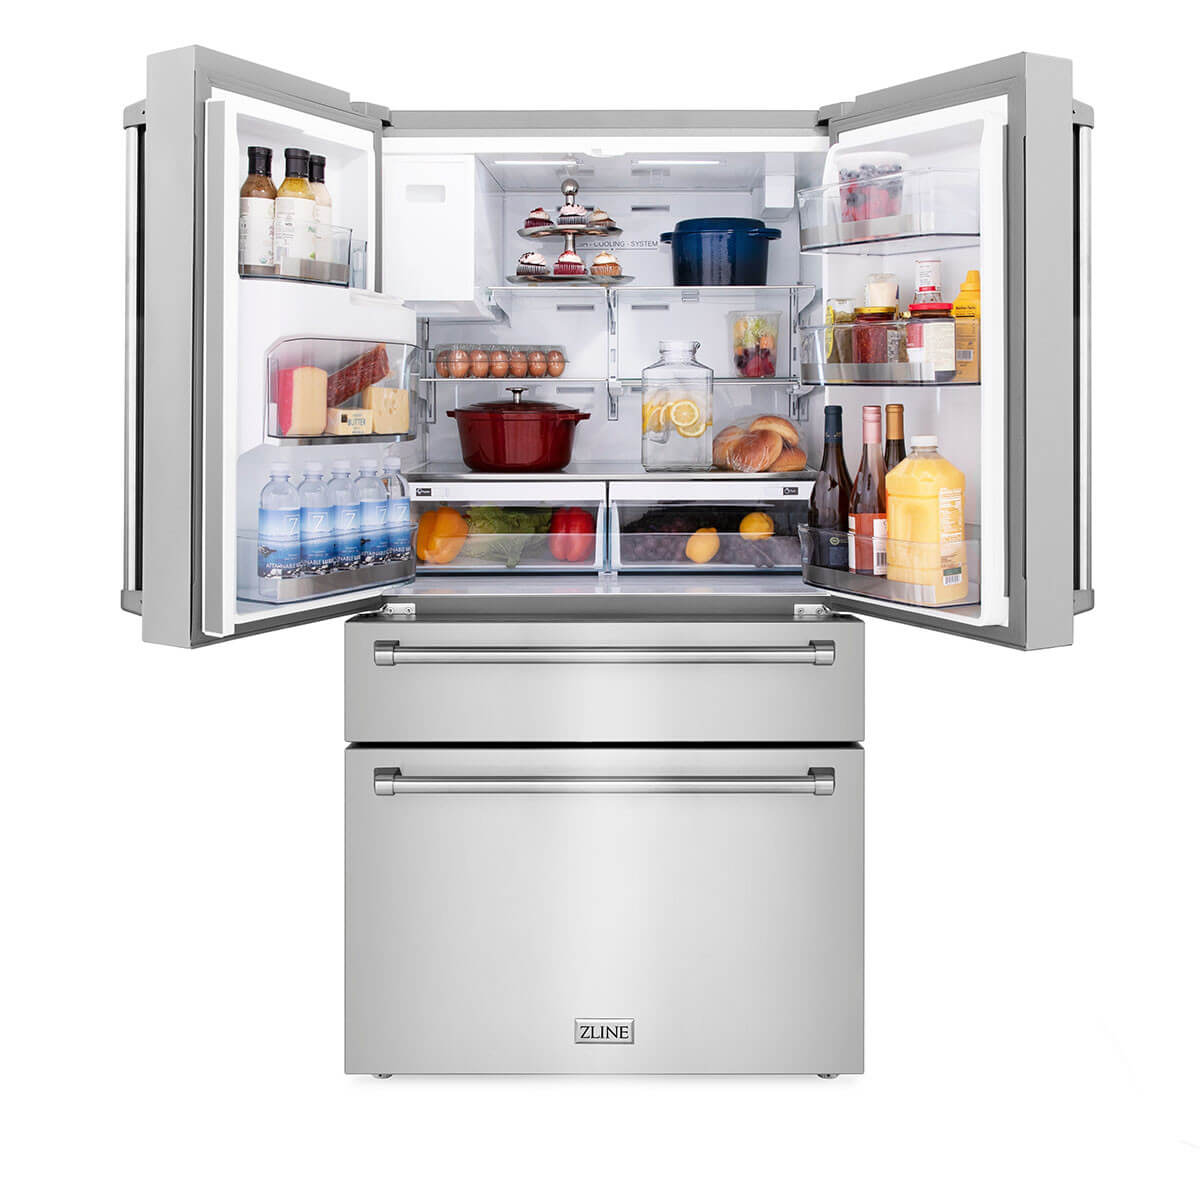 ZLINE Refrigerator Review: RFM-W-36